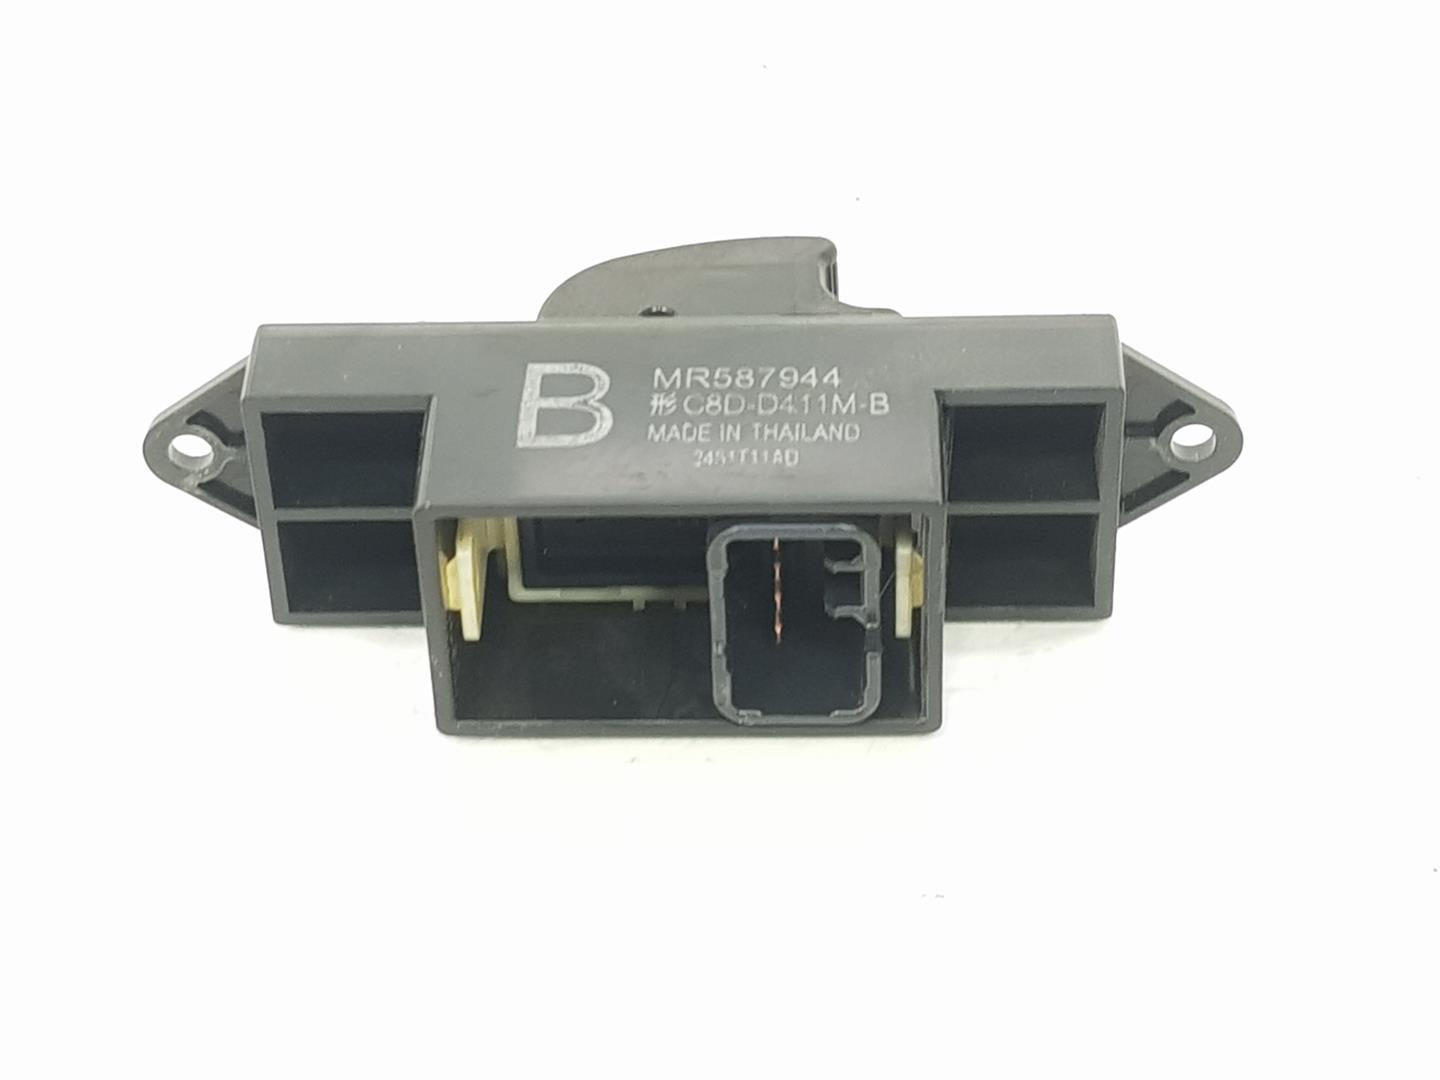 MITSUBISHI Outlander 2 generation (2005-2013) Rear Right Door Window Control Switch MR587944, MR587944 19700023